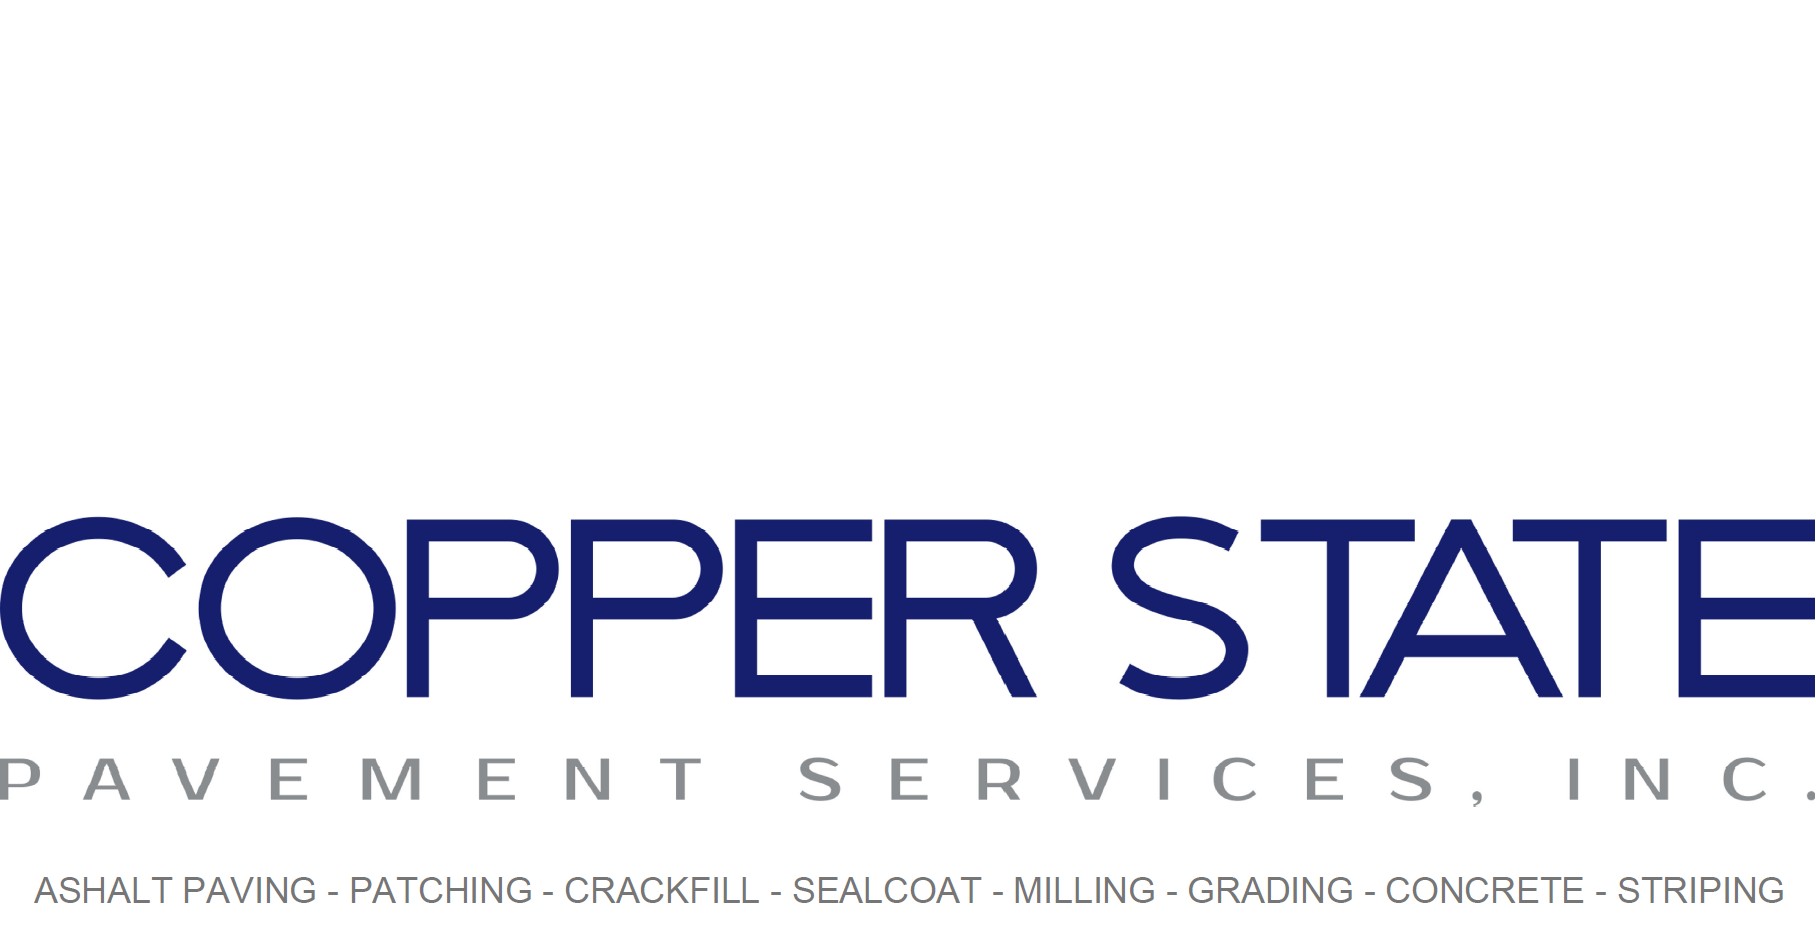 Copper State Pavement Services Inc Linkedin